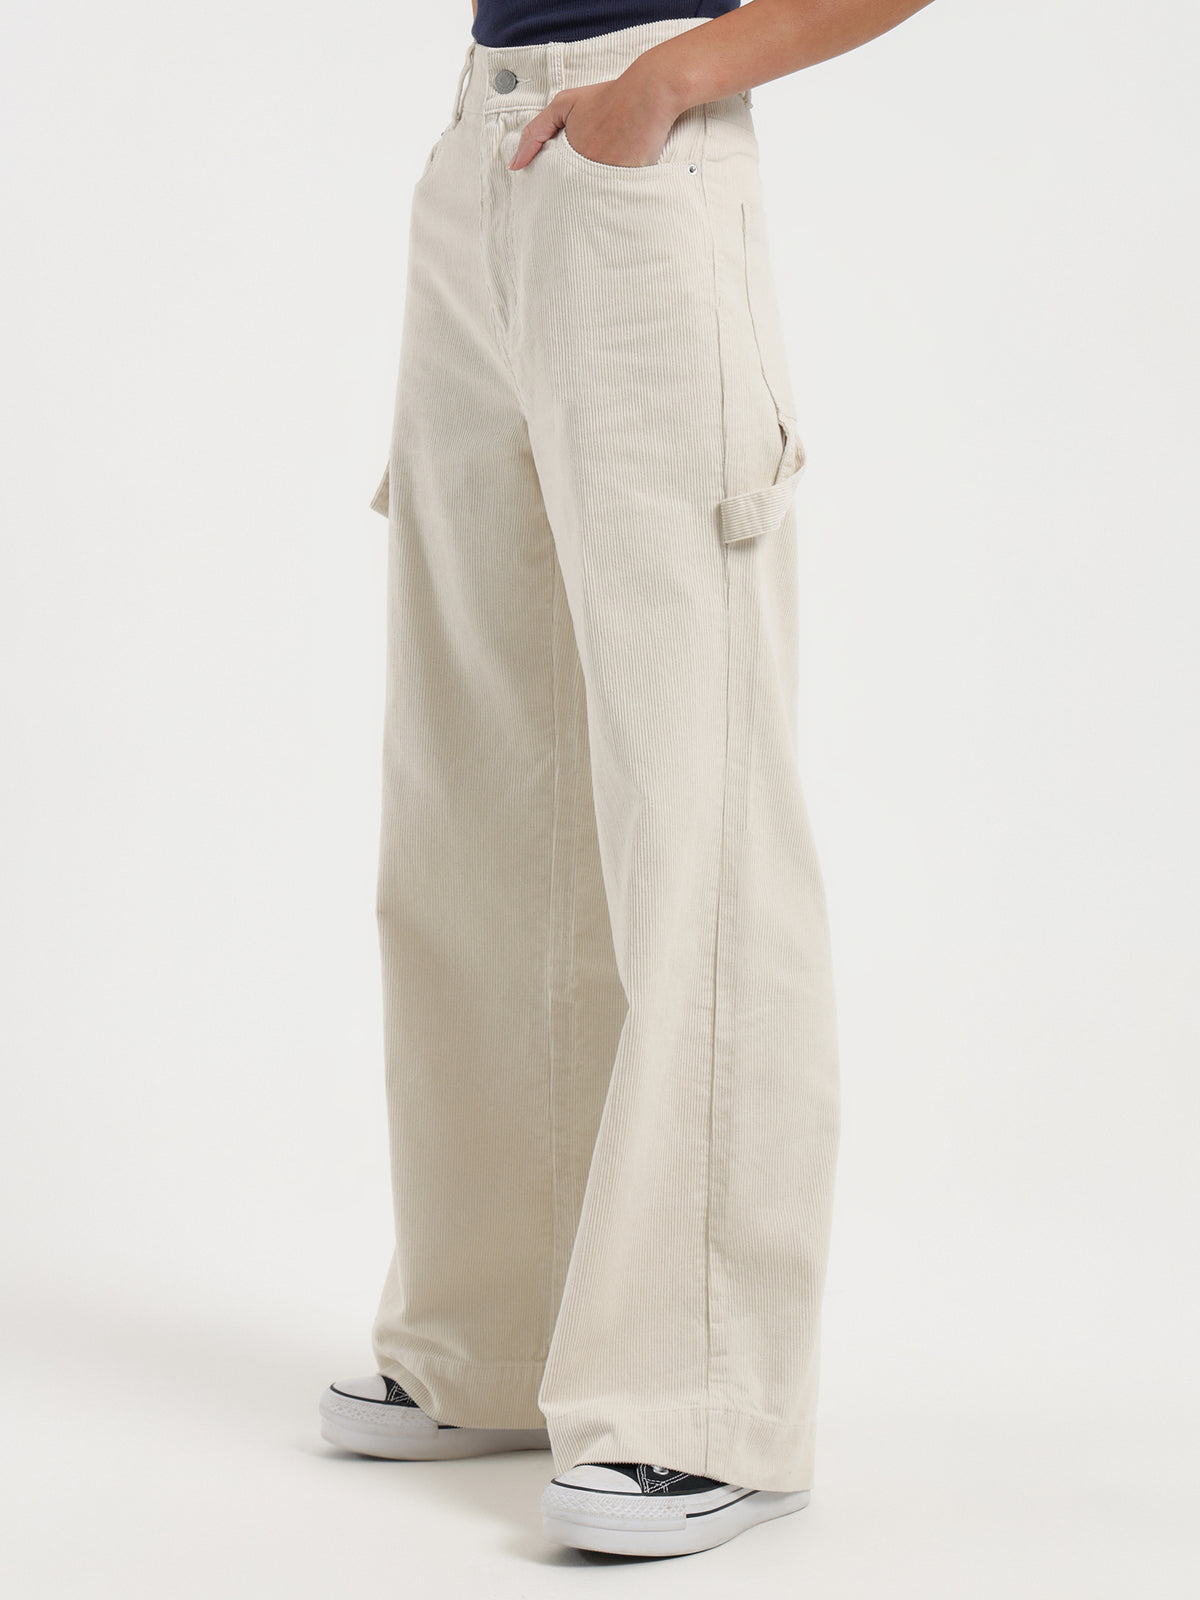 Ellis Cord Pants in Off White